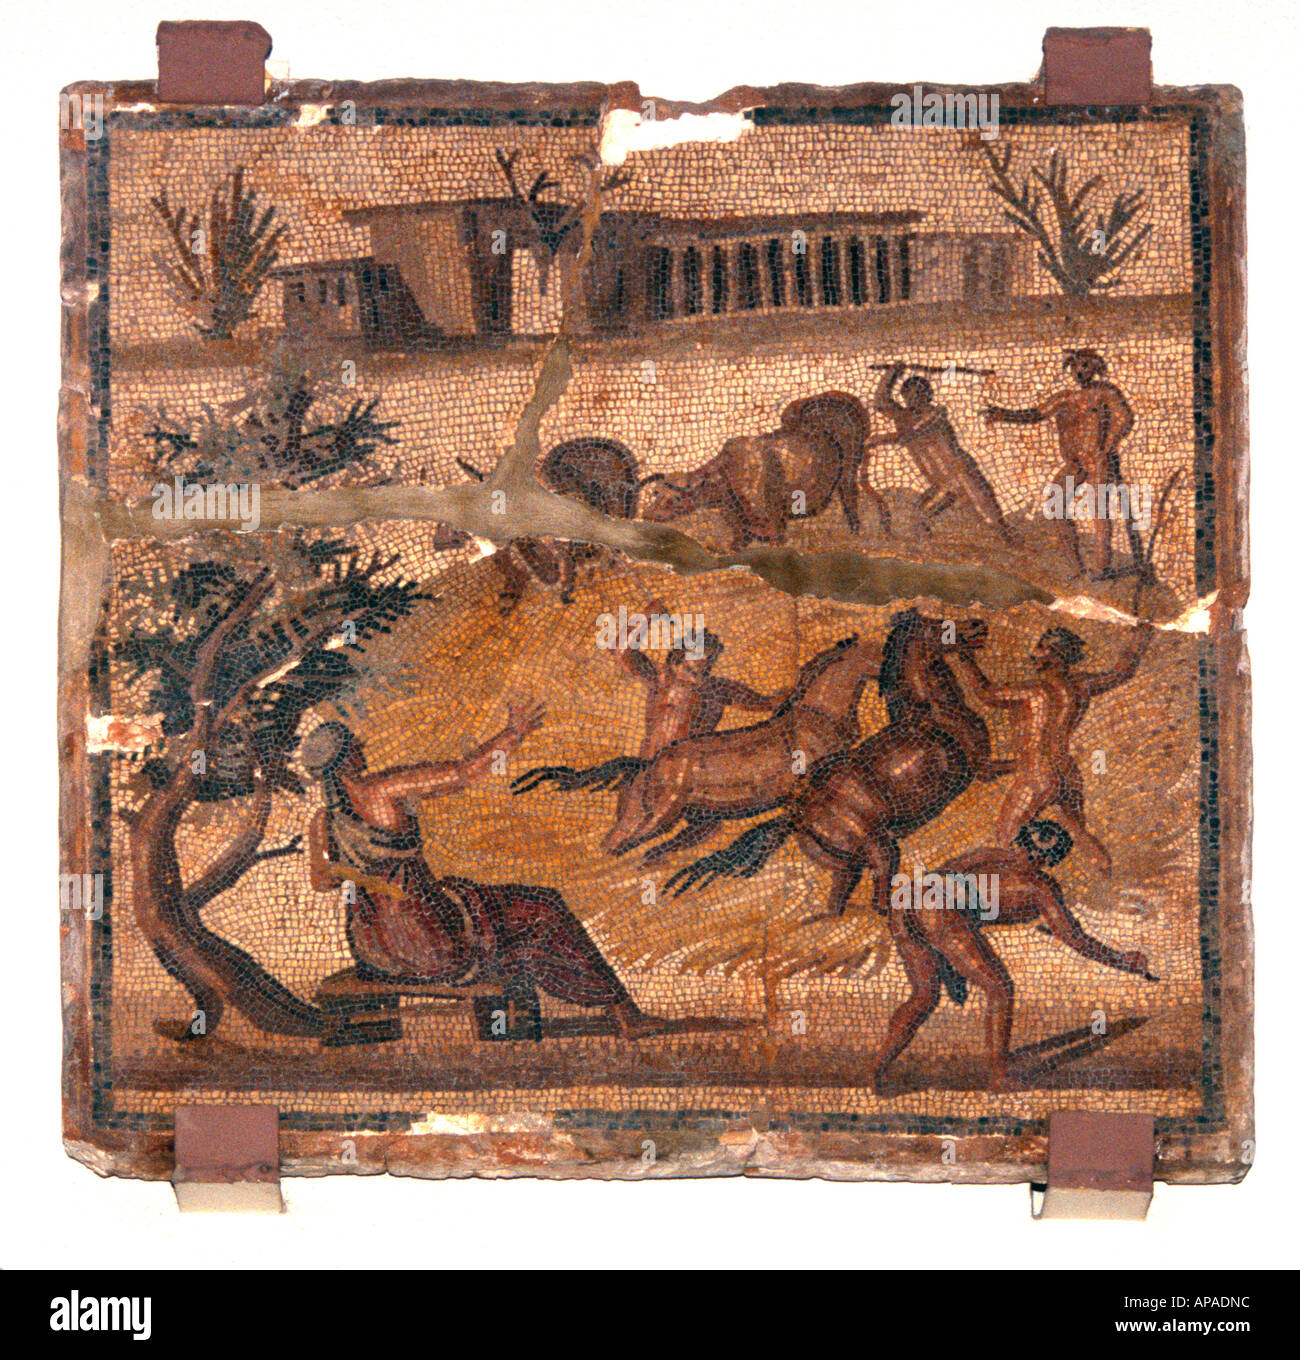 Mosaik von Athleten zähmen Pferde, Römerzeit, Libyen Stockfoto